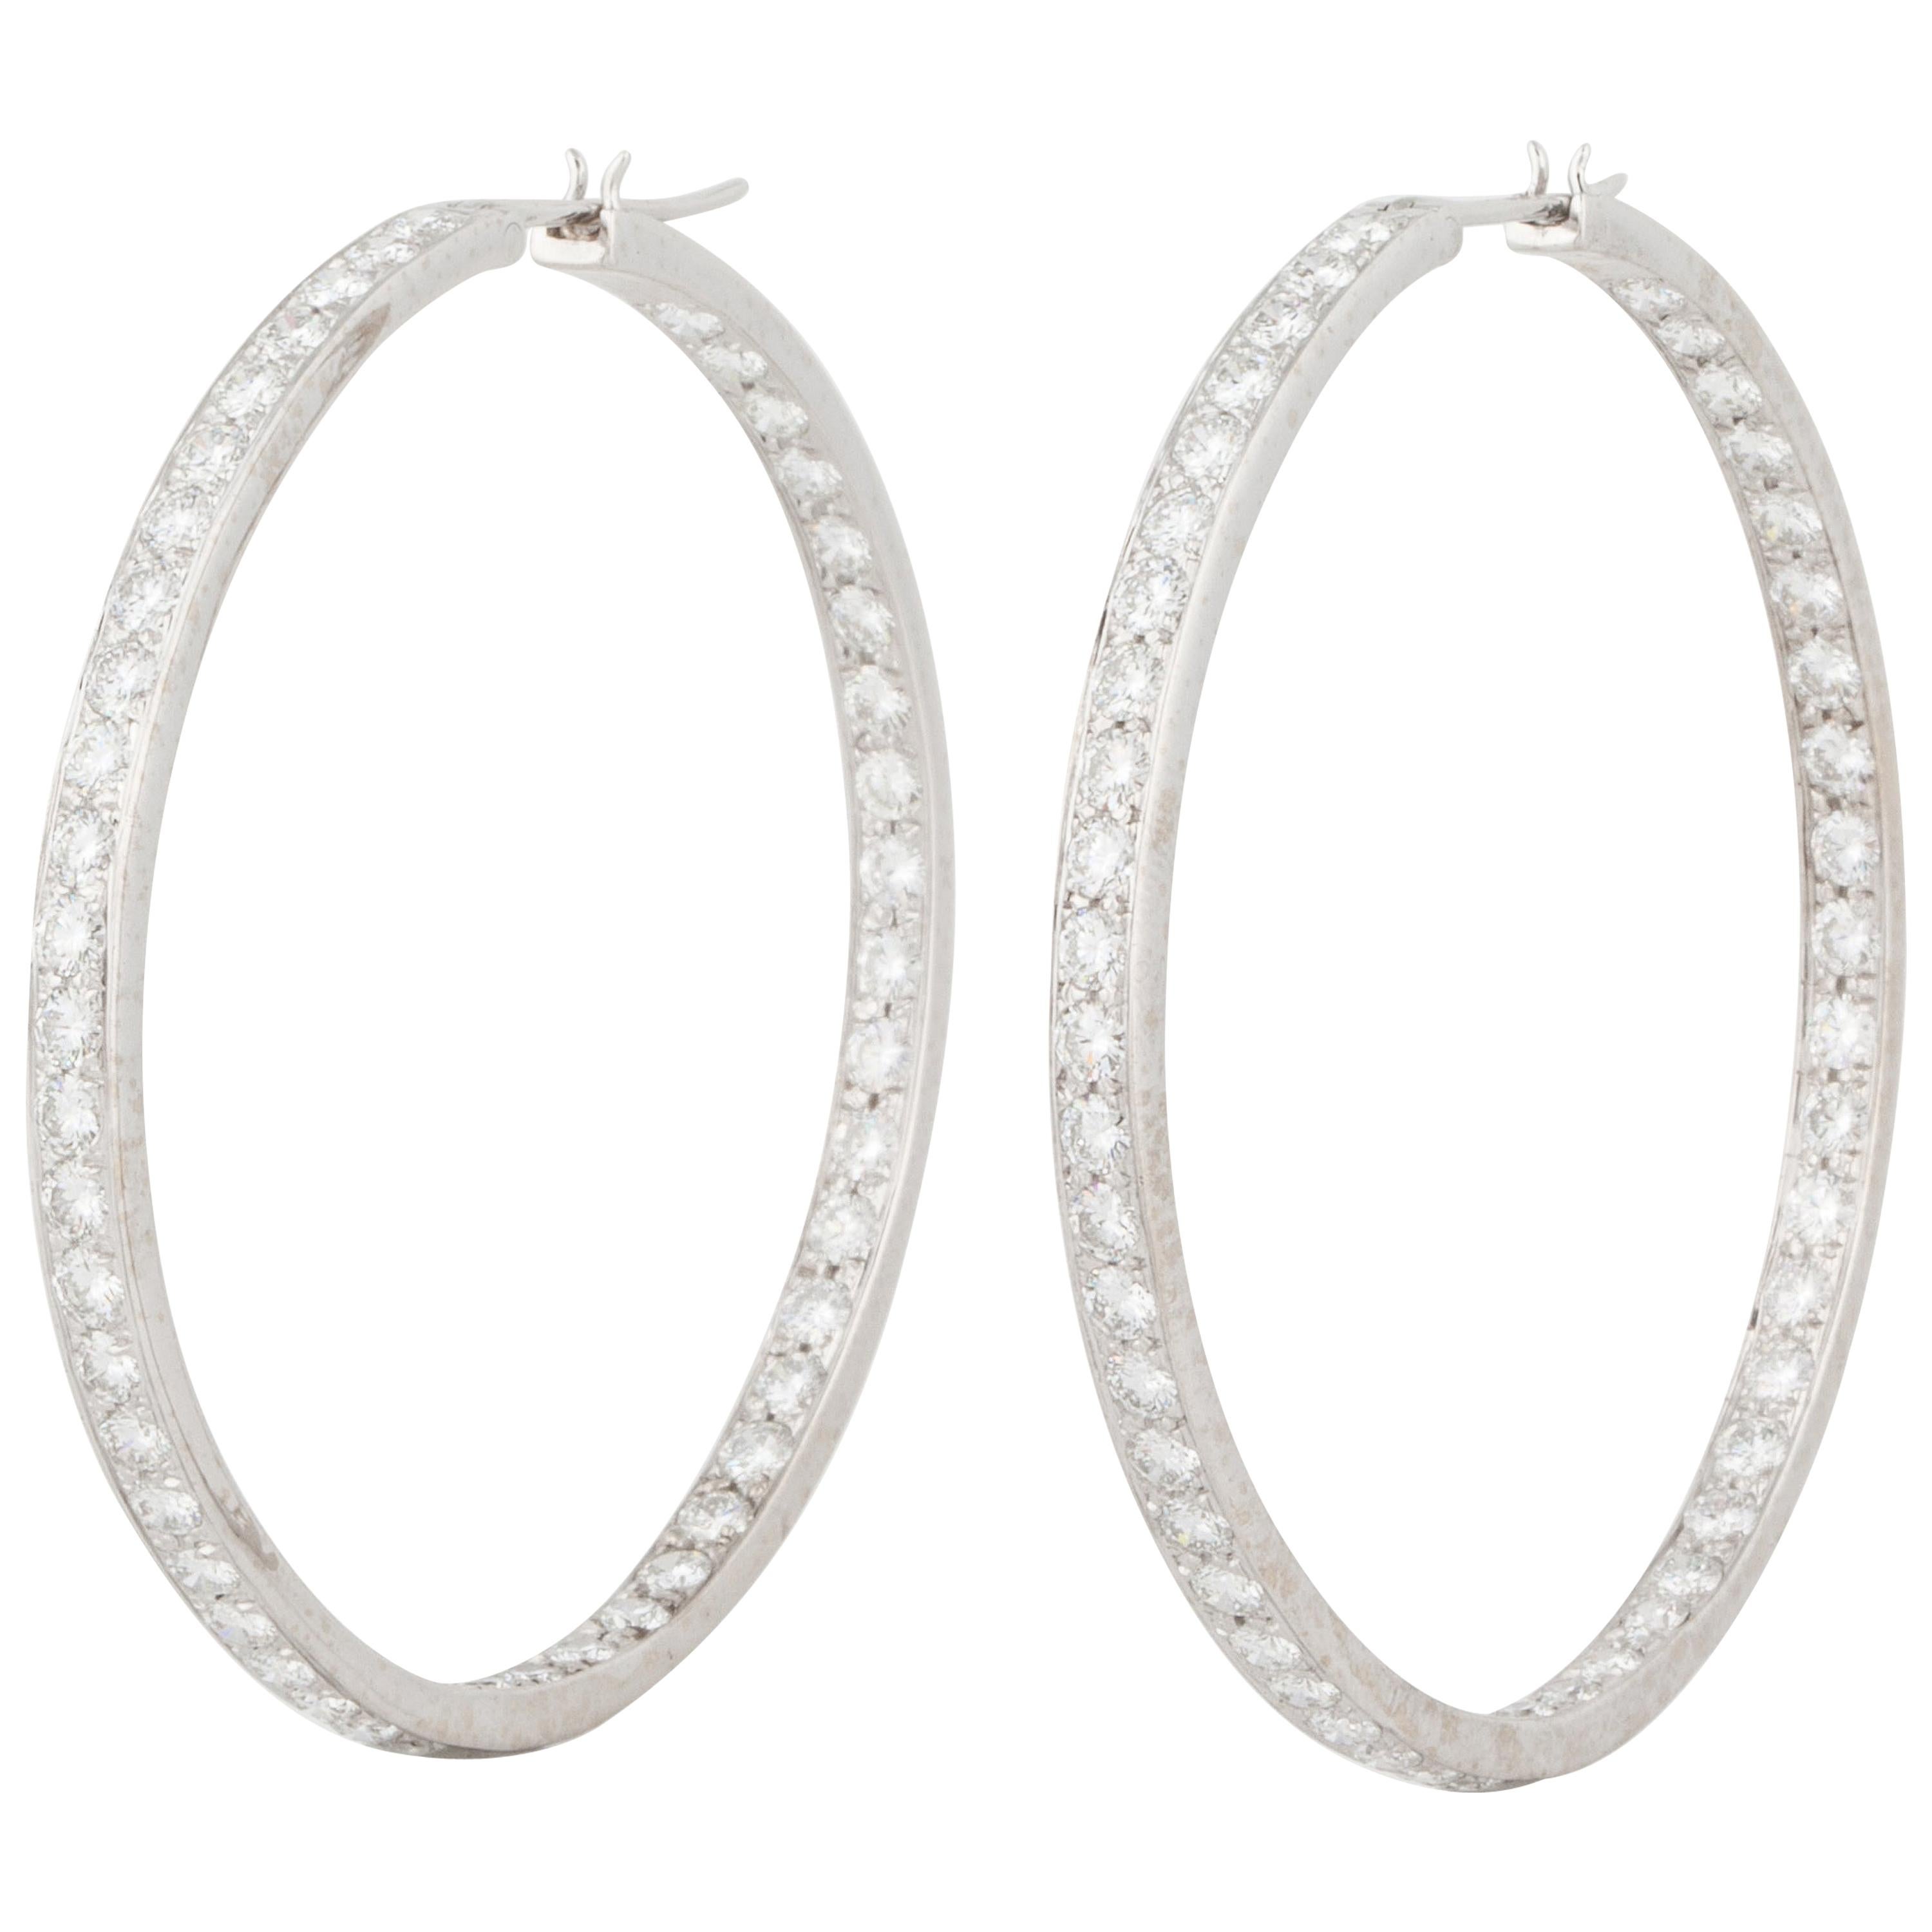 Large Diamond Hoop Earrings in 18K White Gold